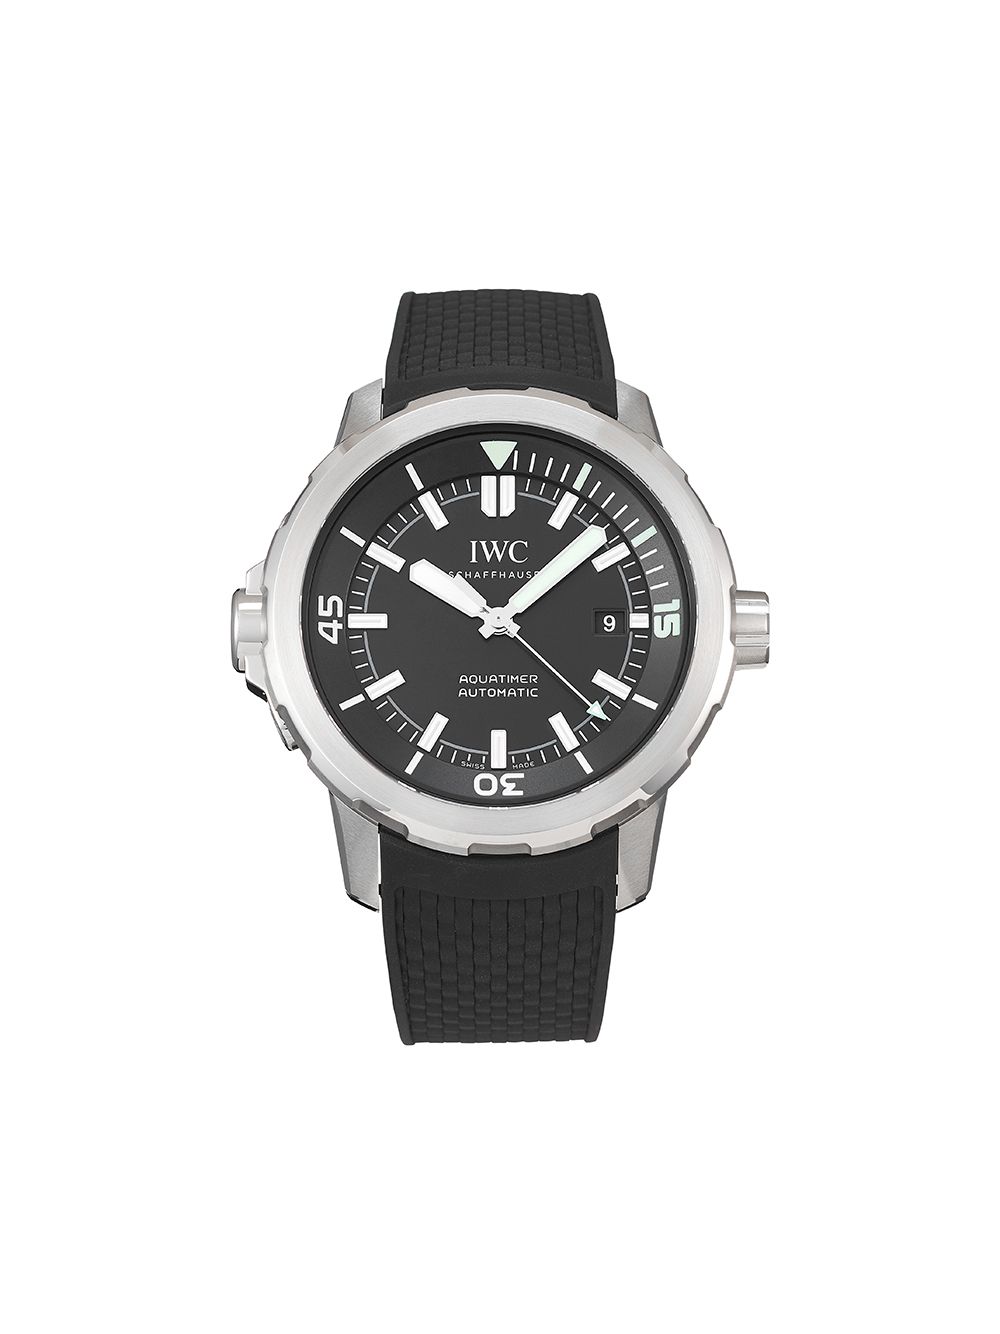 фото Iwc schaffhausen наручные часы aquatimer pre-owned 42 мм 2020-го года